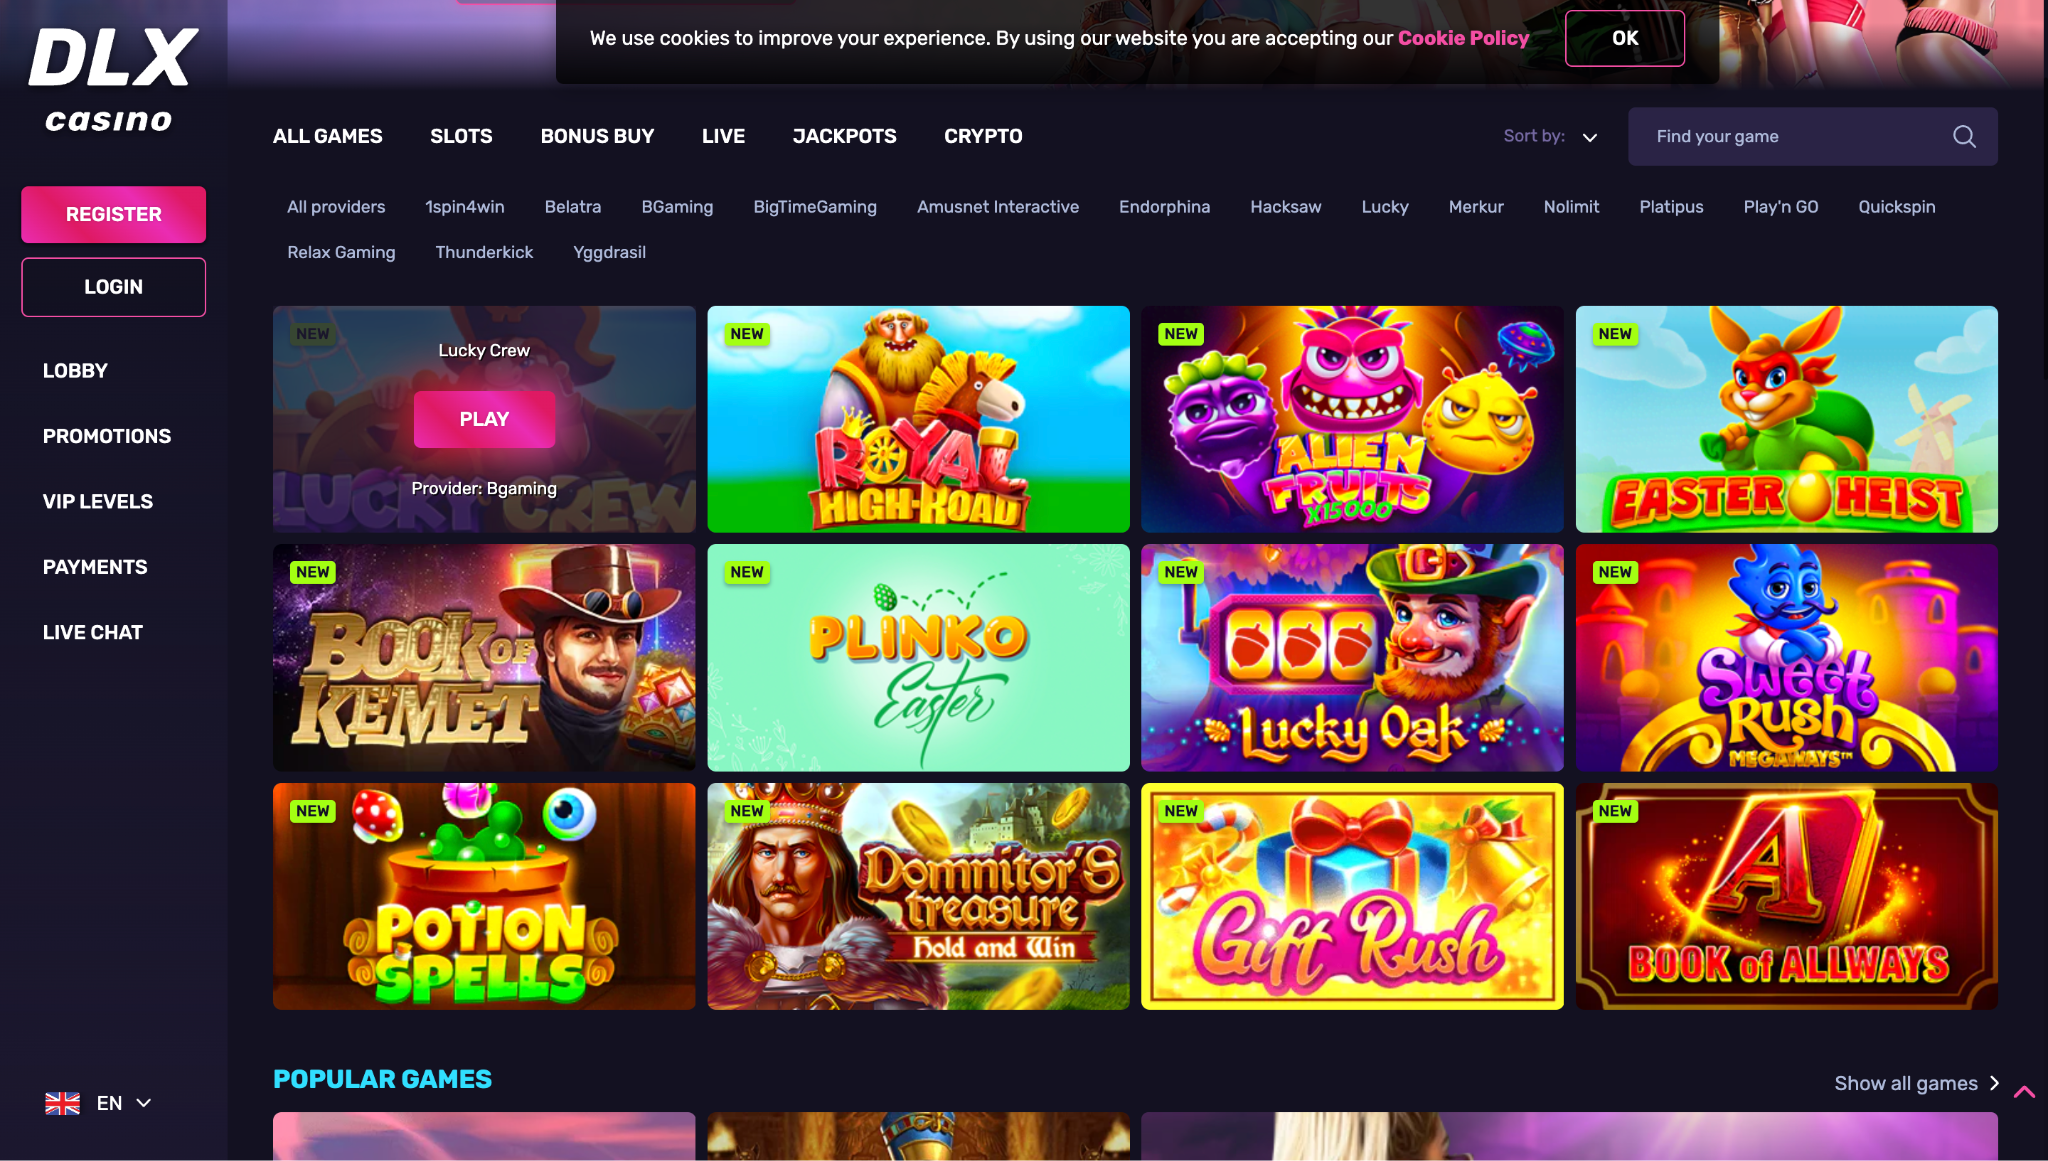 Screenshot of DLX casino landing page